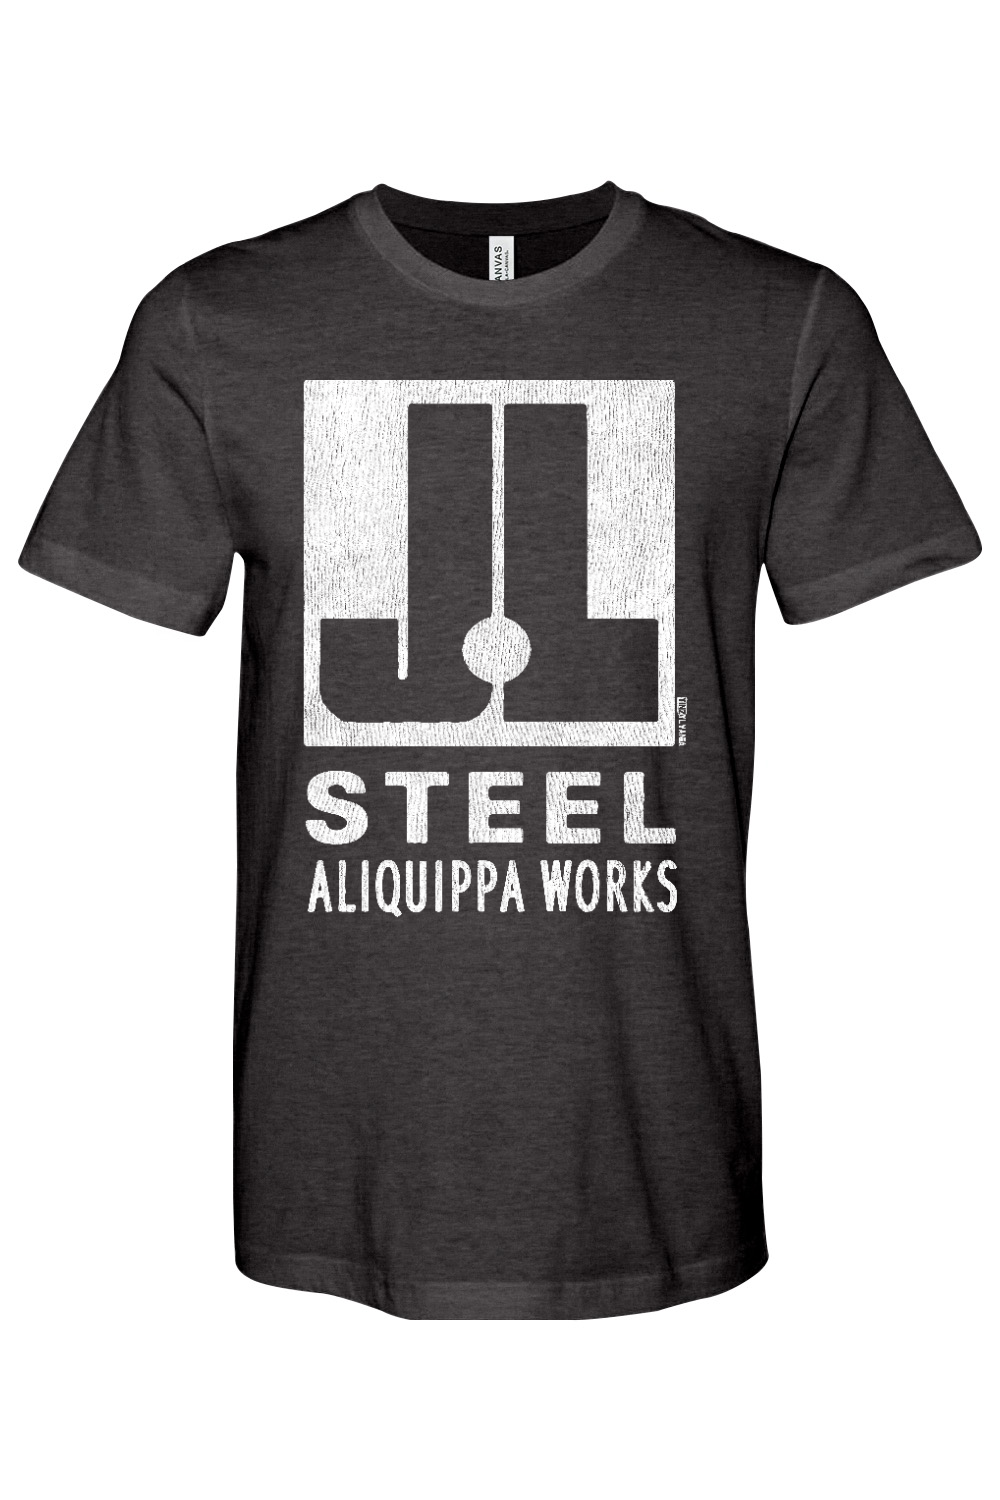 J&L Steel - Aliquippa Works - Bella + Canvas Jersey Tee - Yinzylvania